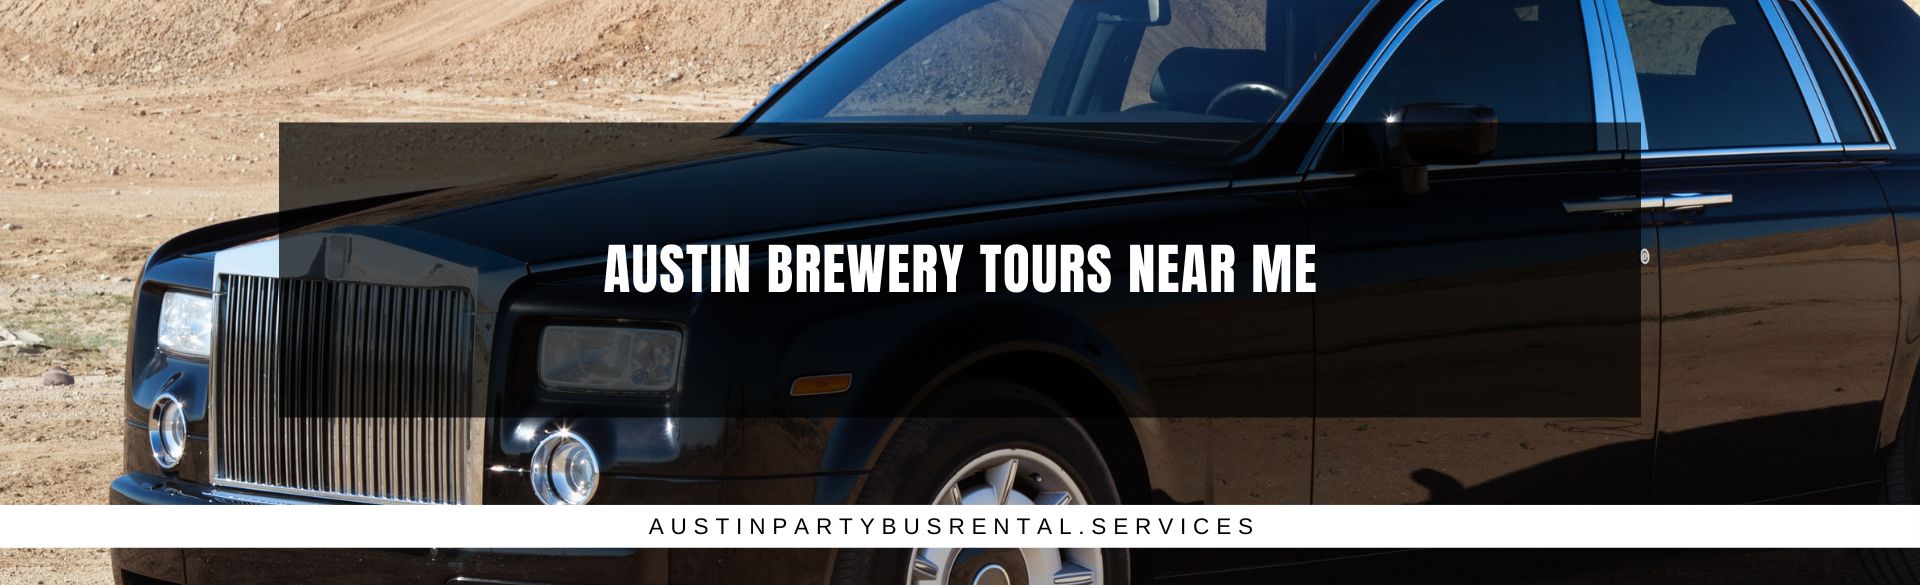 Austin Brewery Tours Near Me